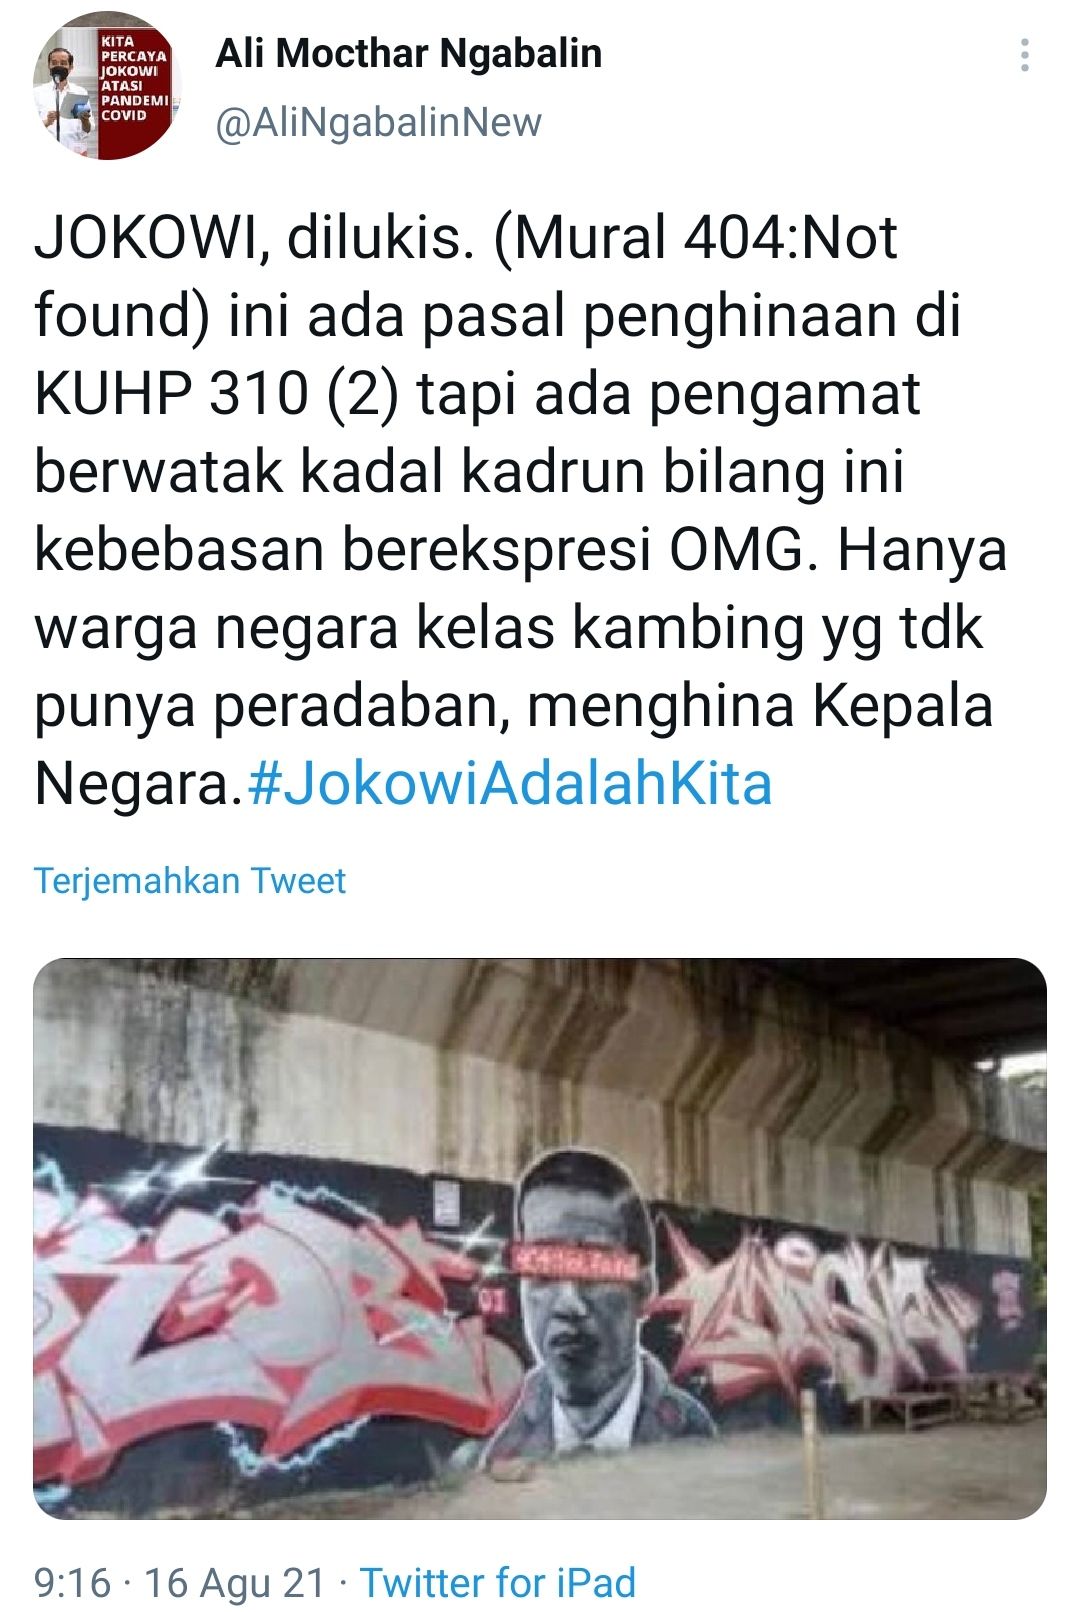 Tangkapan layar cuitan Ali Mochtar Ngabalin soal mural "Jokowi 404: Not Found"./